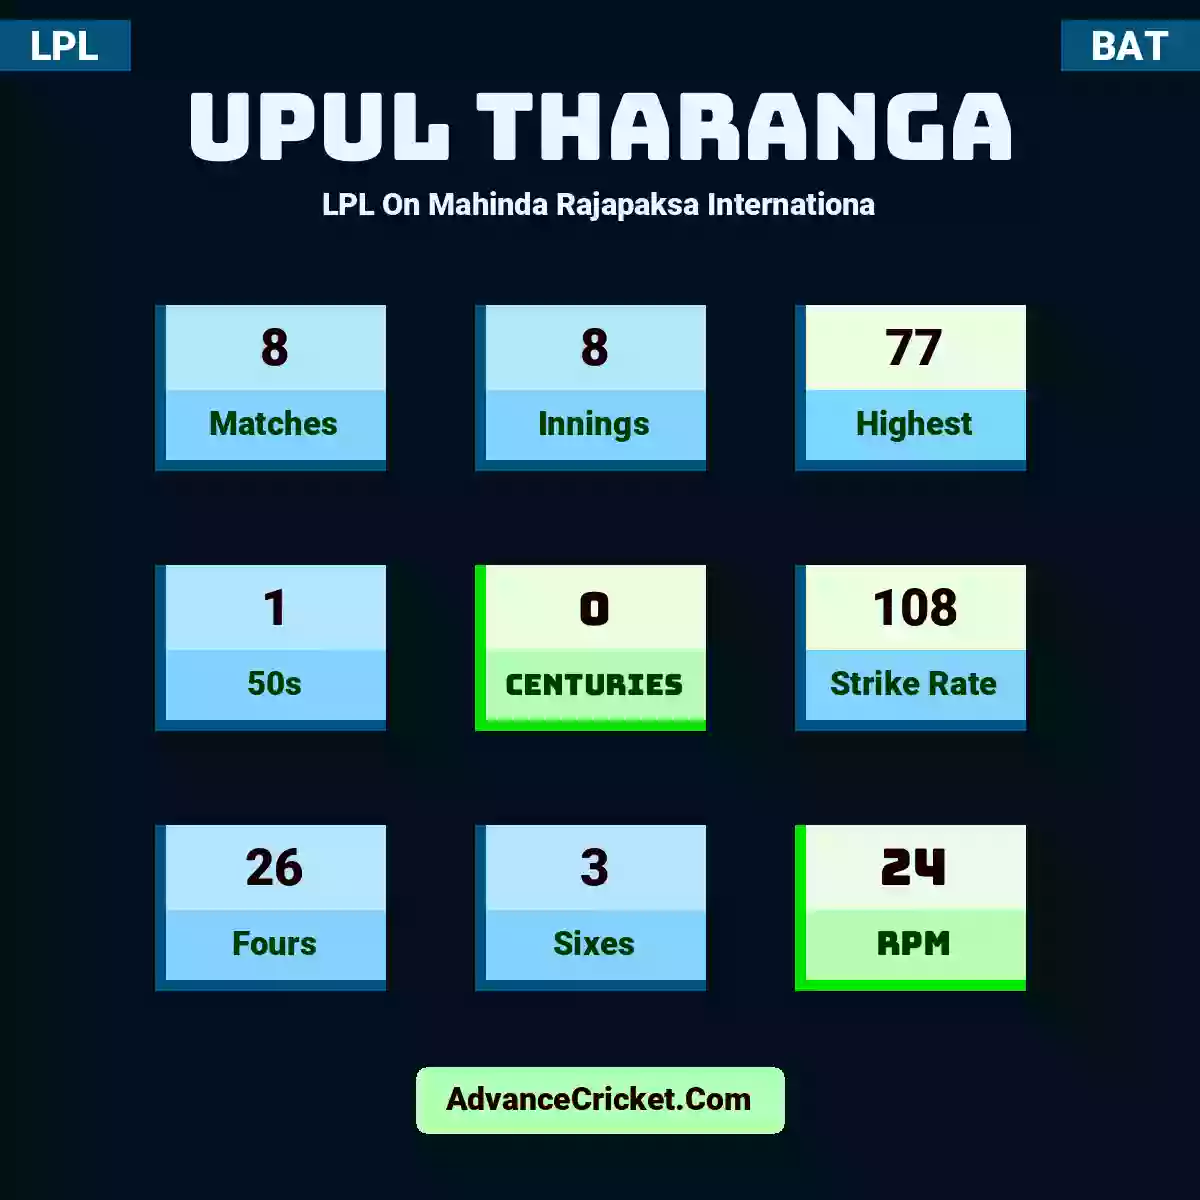 Upul Tharanga LPL  On Mahinda Rajapaksa Internationa, Upul Tharanga played 8 matches, scored 77 runs as highest, 1 half-centuries, and 0 centuries, with a strike rate of 108. U.Tharanga hit 26 fours and 3 sixes, with an RPM of 24.